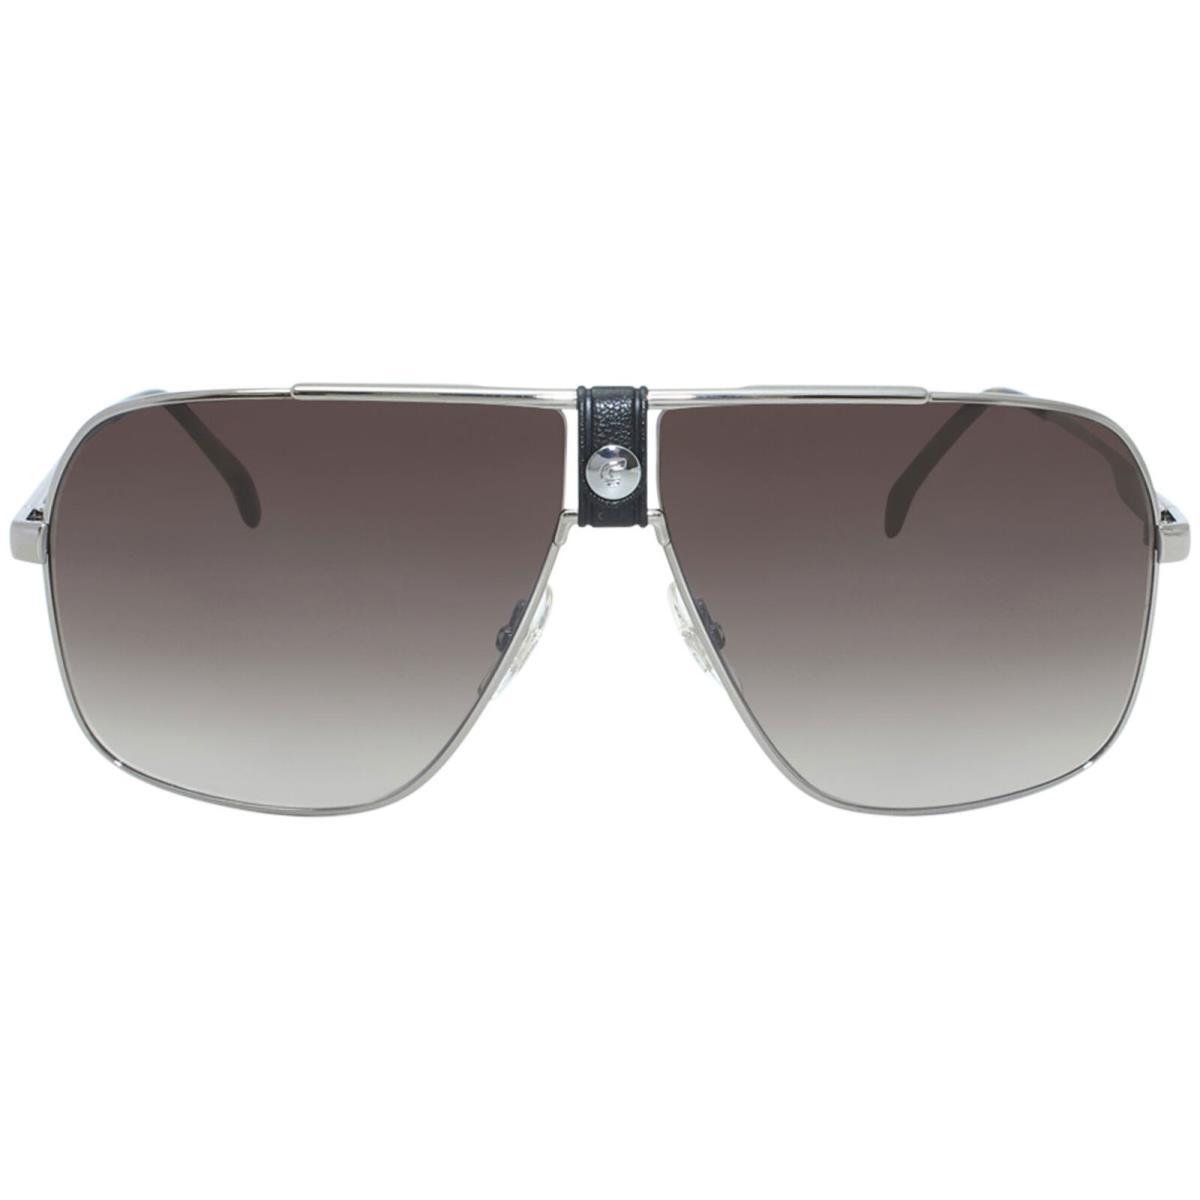 Carrera 1018/S 6LBHA Sunglasses Men`s Ruthenium-havana/brown Gradient Lens 63mm - Frame: Silver, Lens: Brown